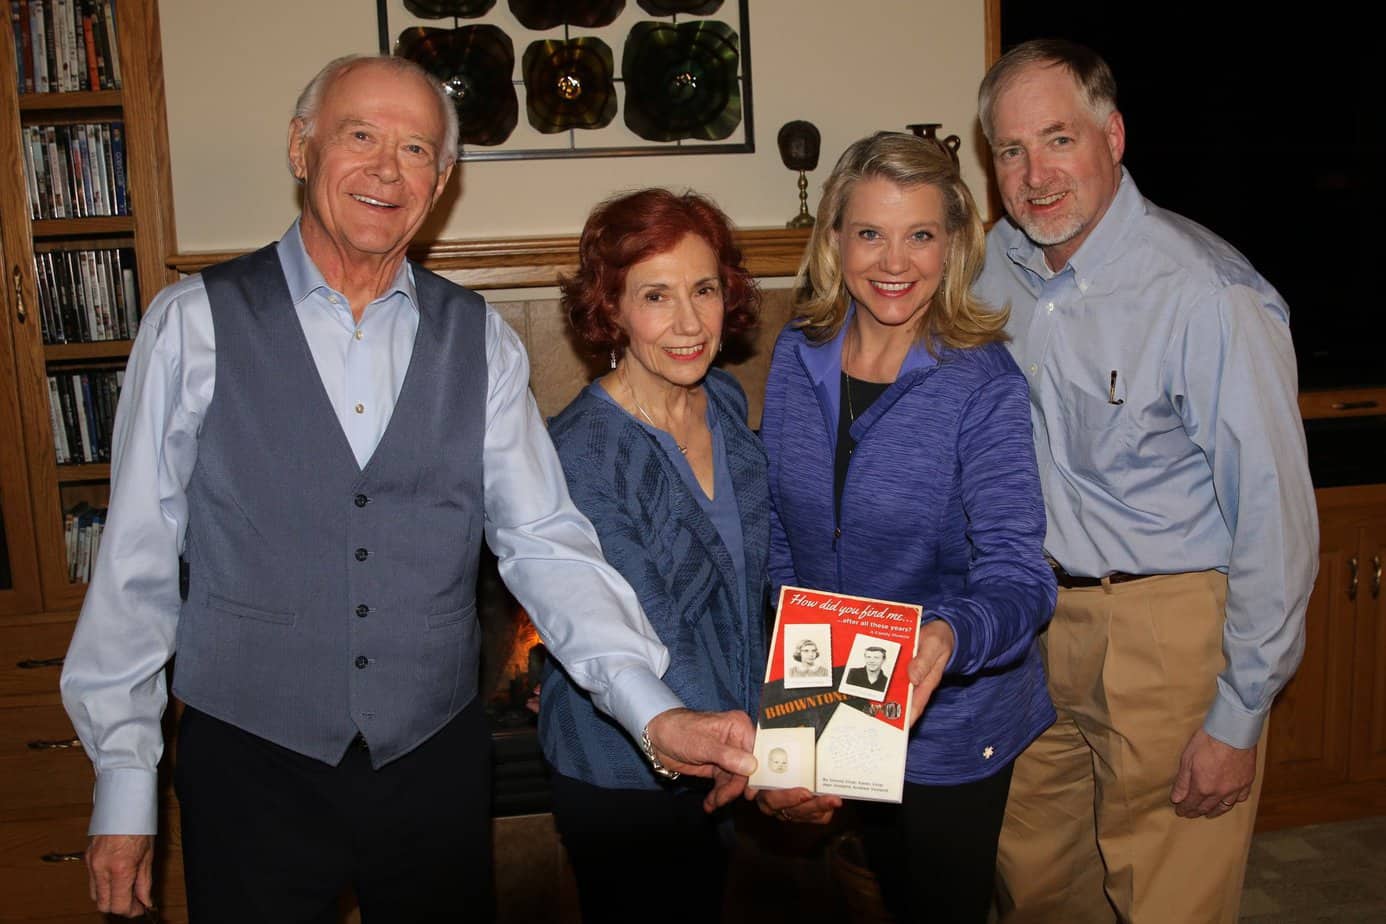 Dennis Vinar, Karen Lehmann, Jean Voxland, and Andrew Voxland holding the "How Did You Find Me?" book